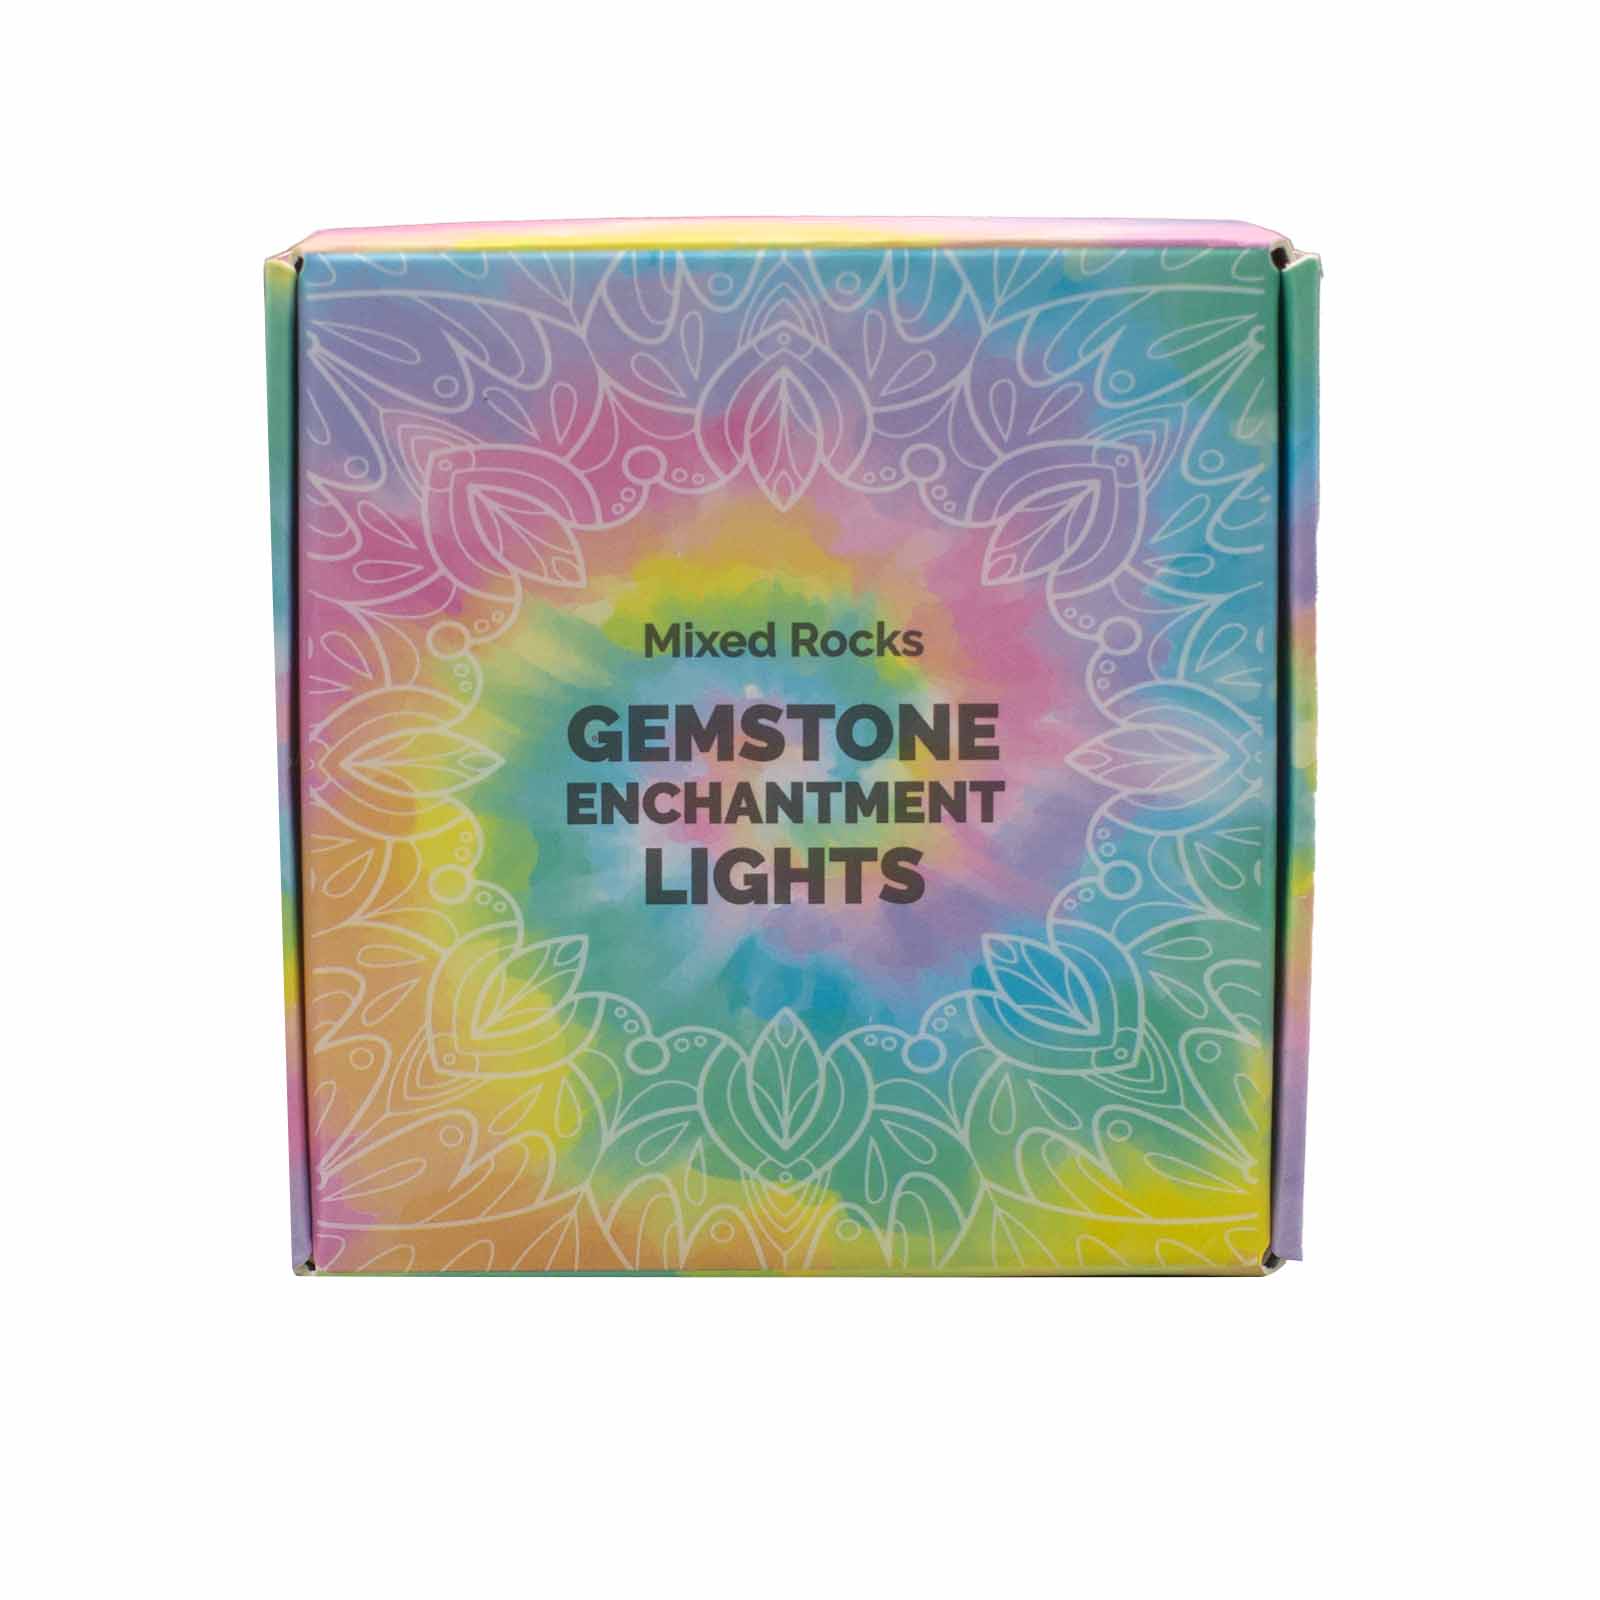 Gemstone Enchantment Lights - Mixed Rocks